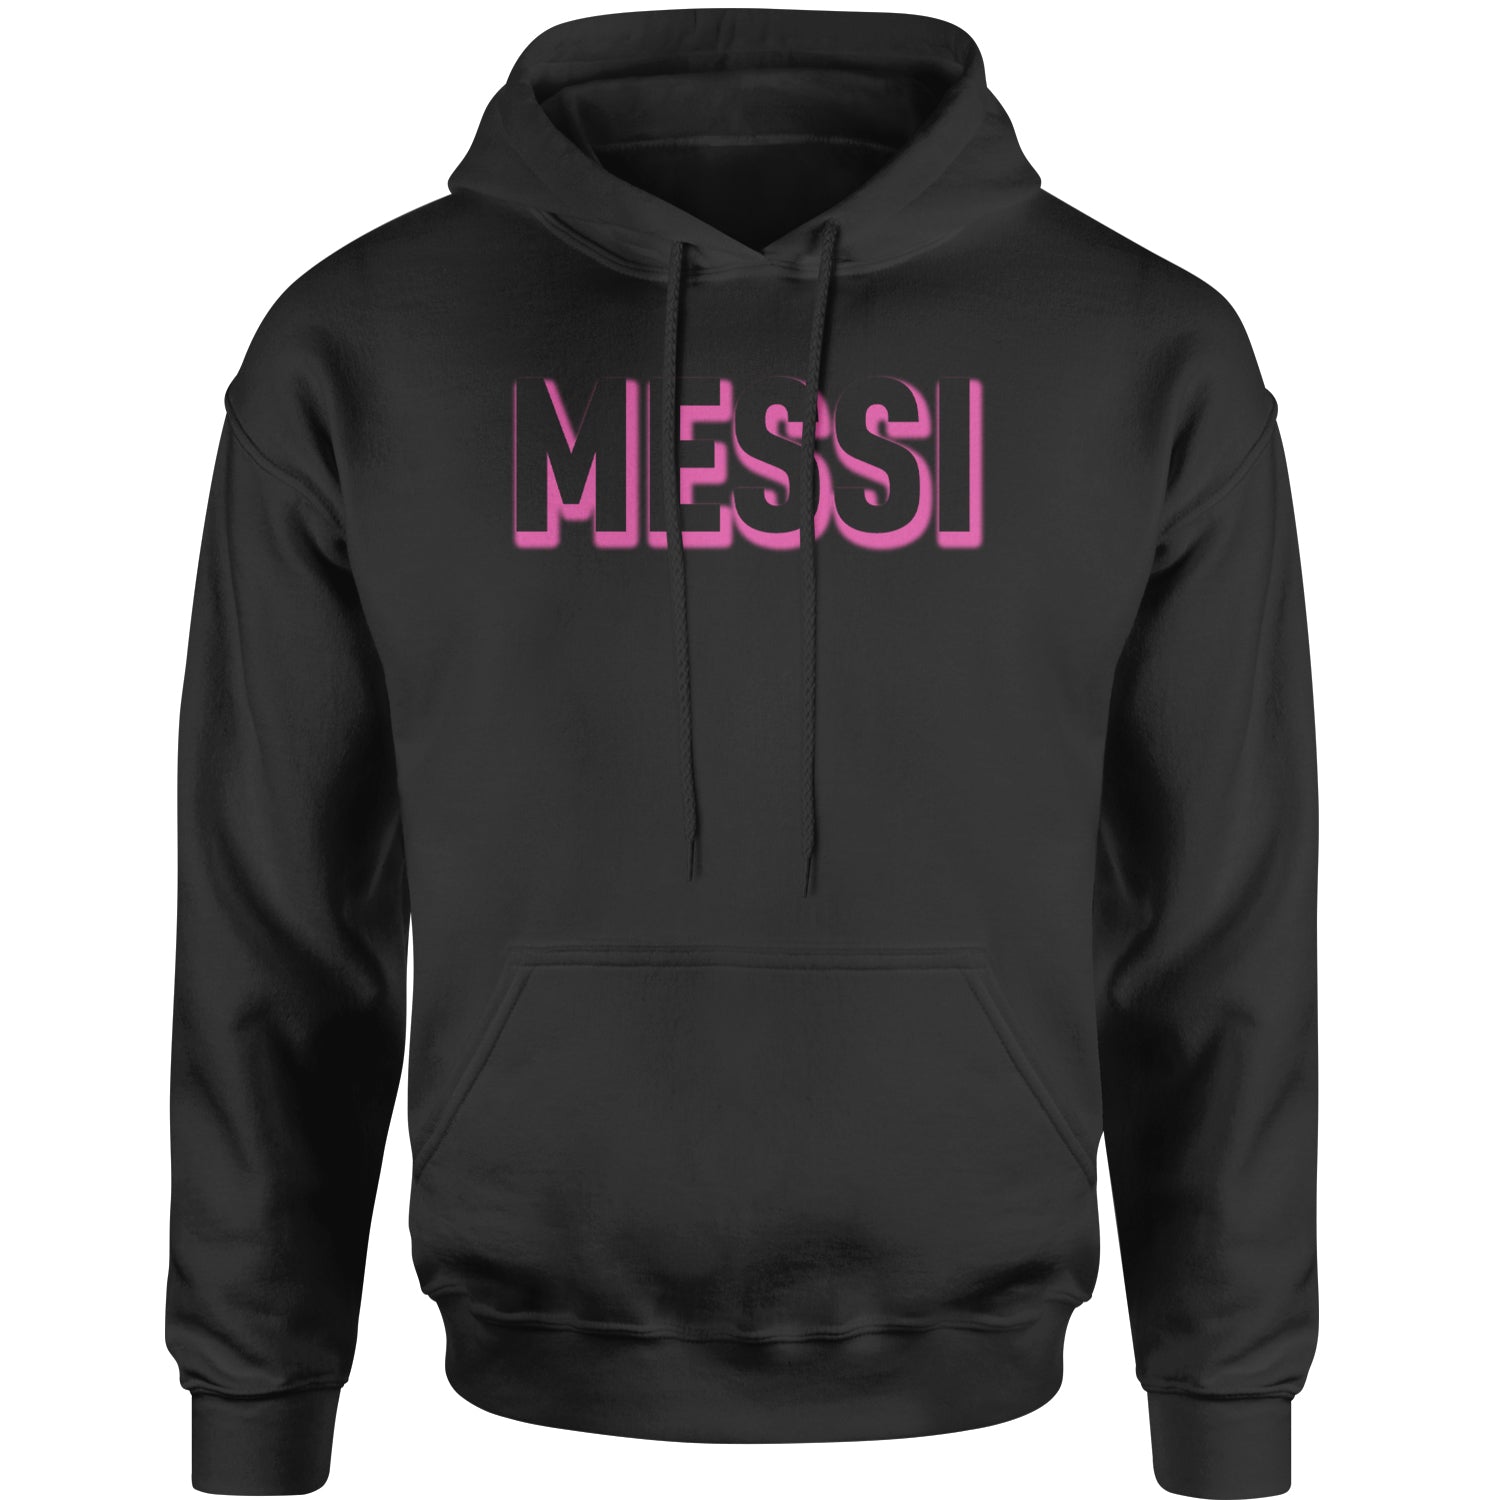 Messi OUTLINE Miami Futbol Adult Hoodie Sweatshirt